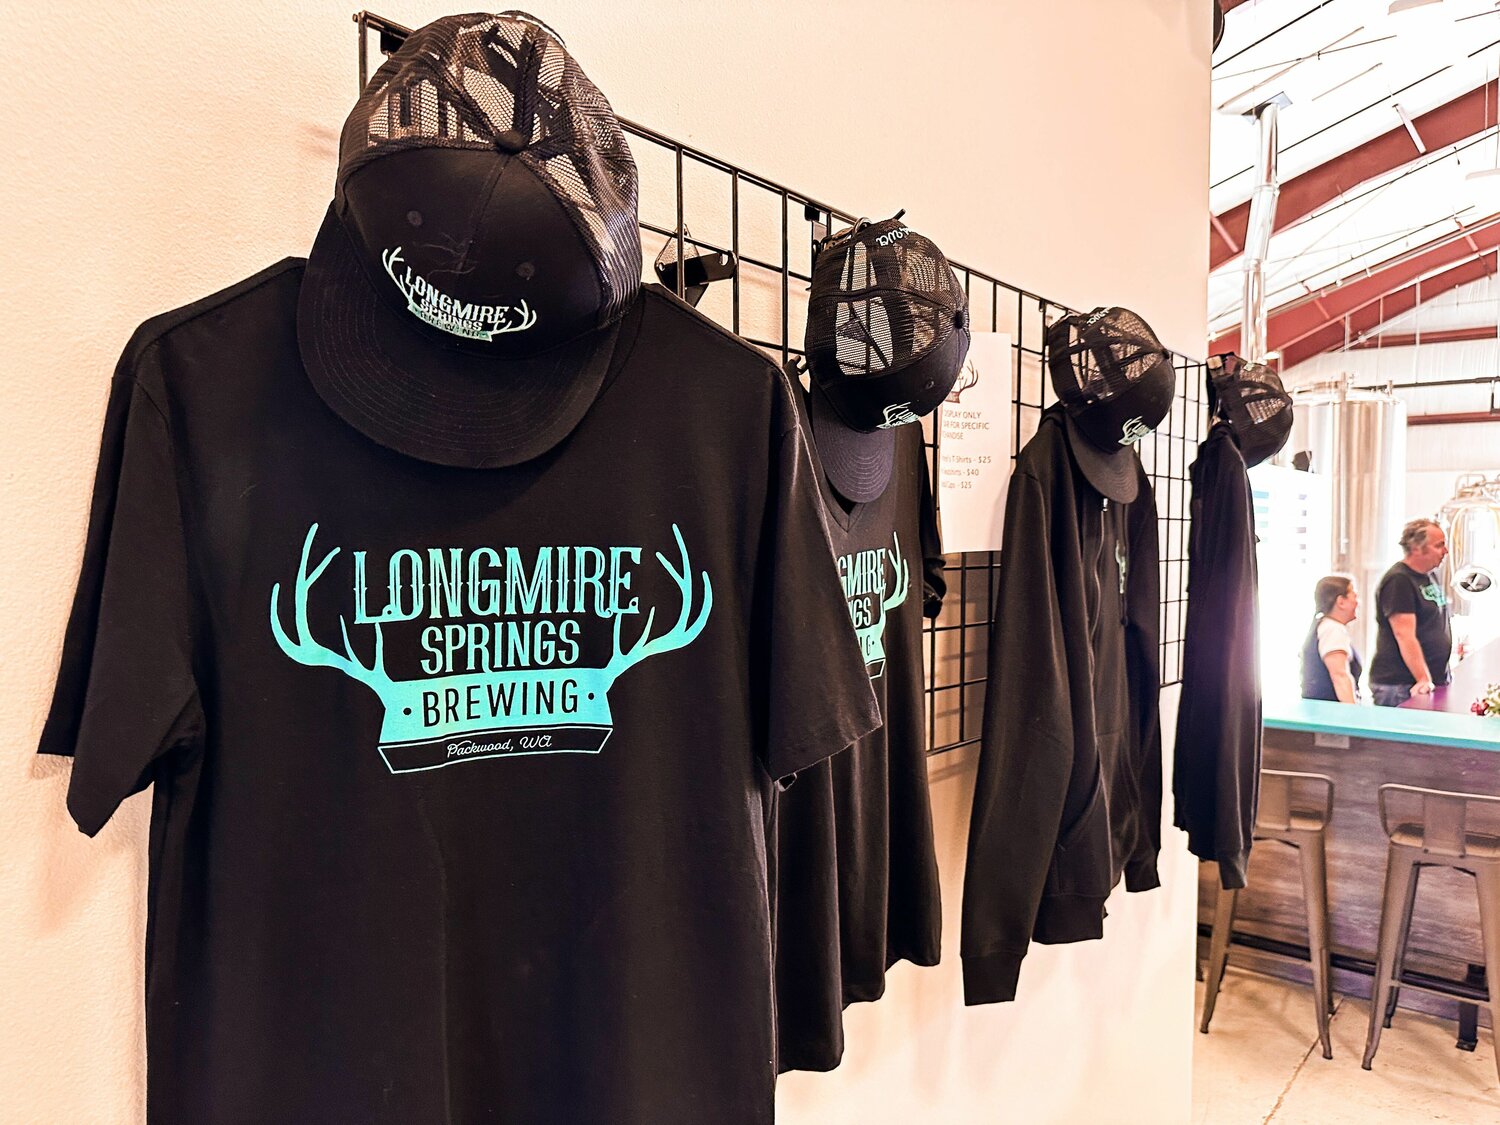 Longmire Springs Brewing merchandise hangs on display in Packwood on Thursday, Aug. 10.